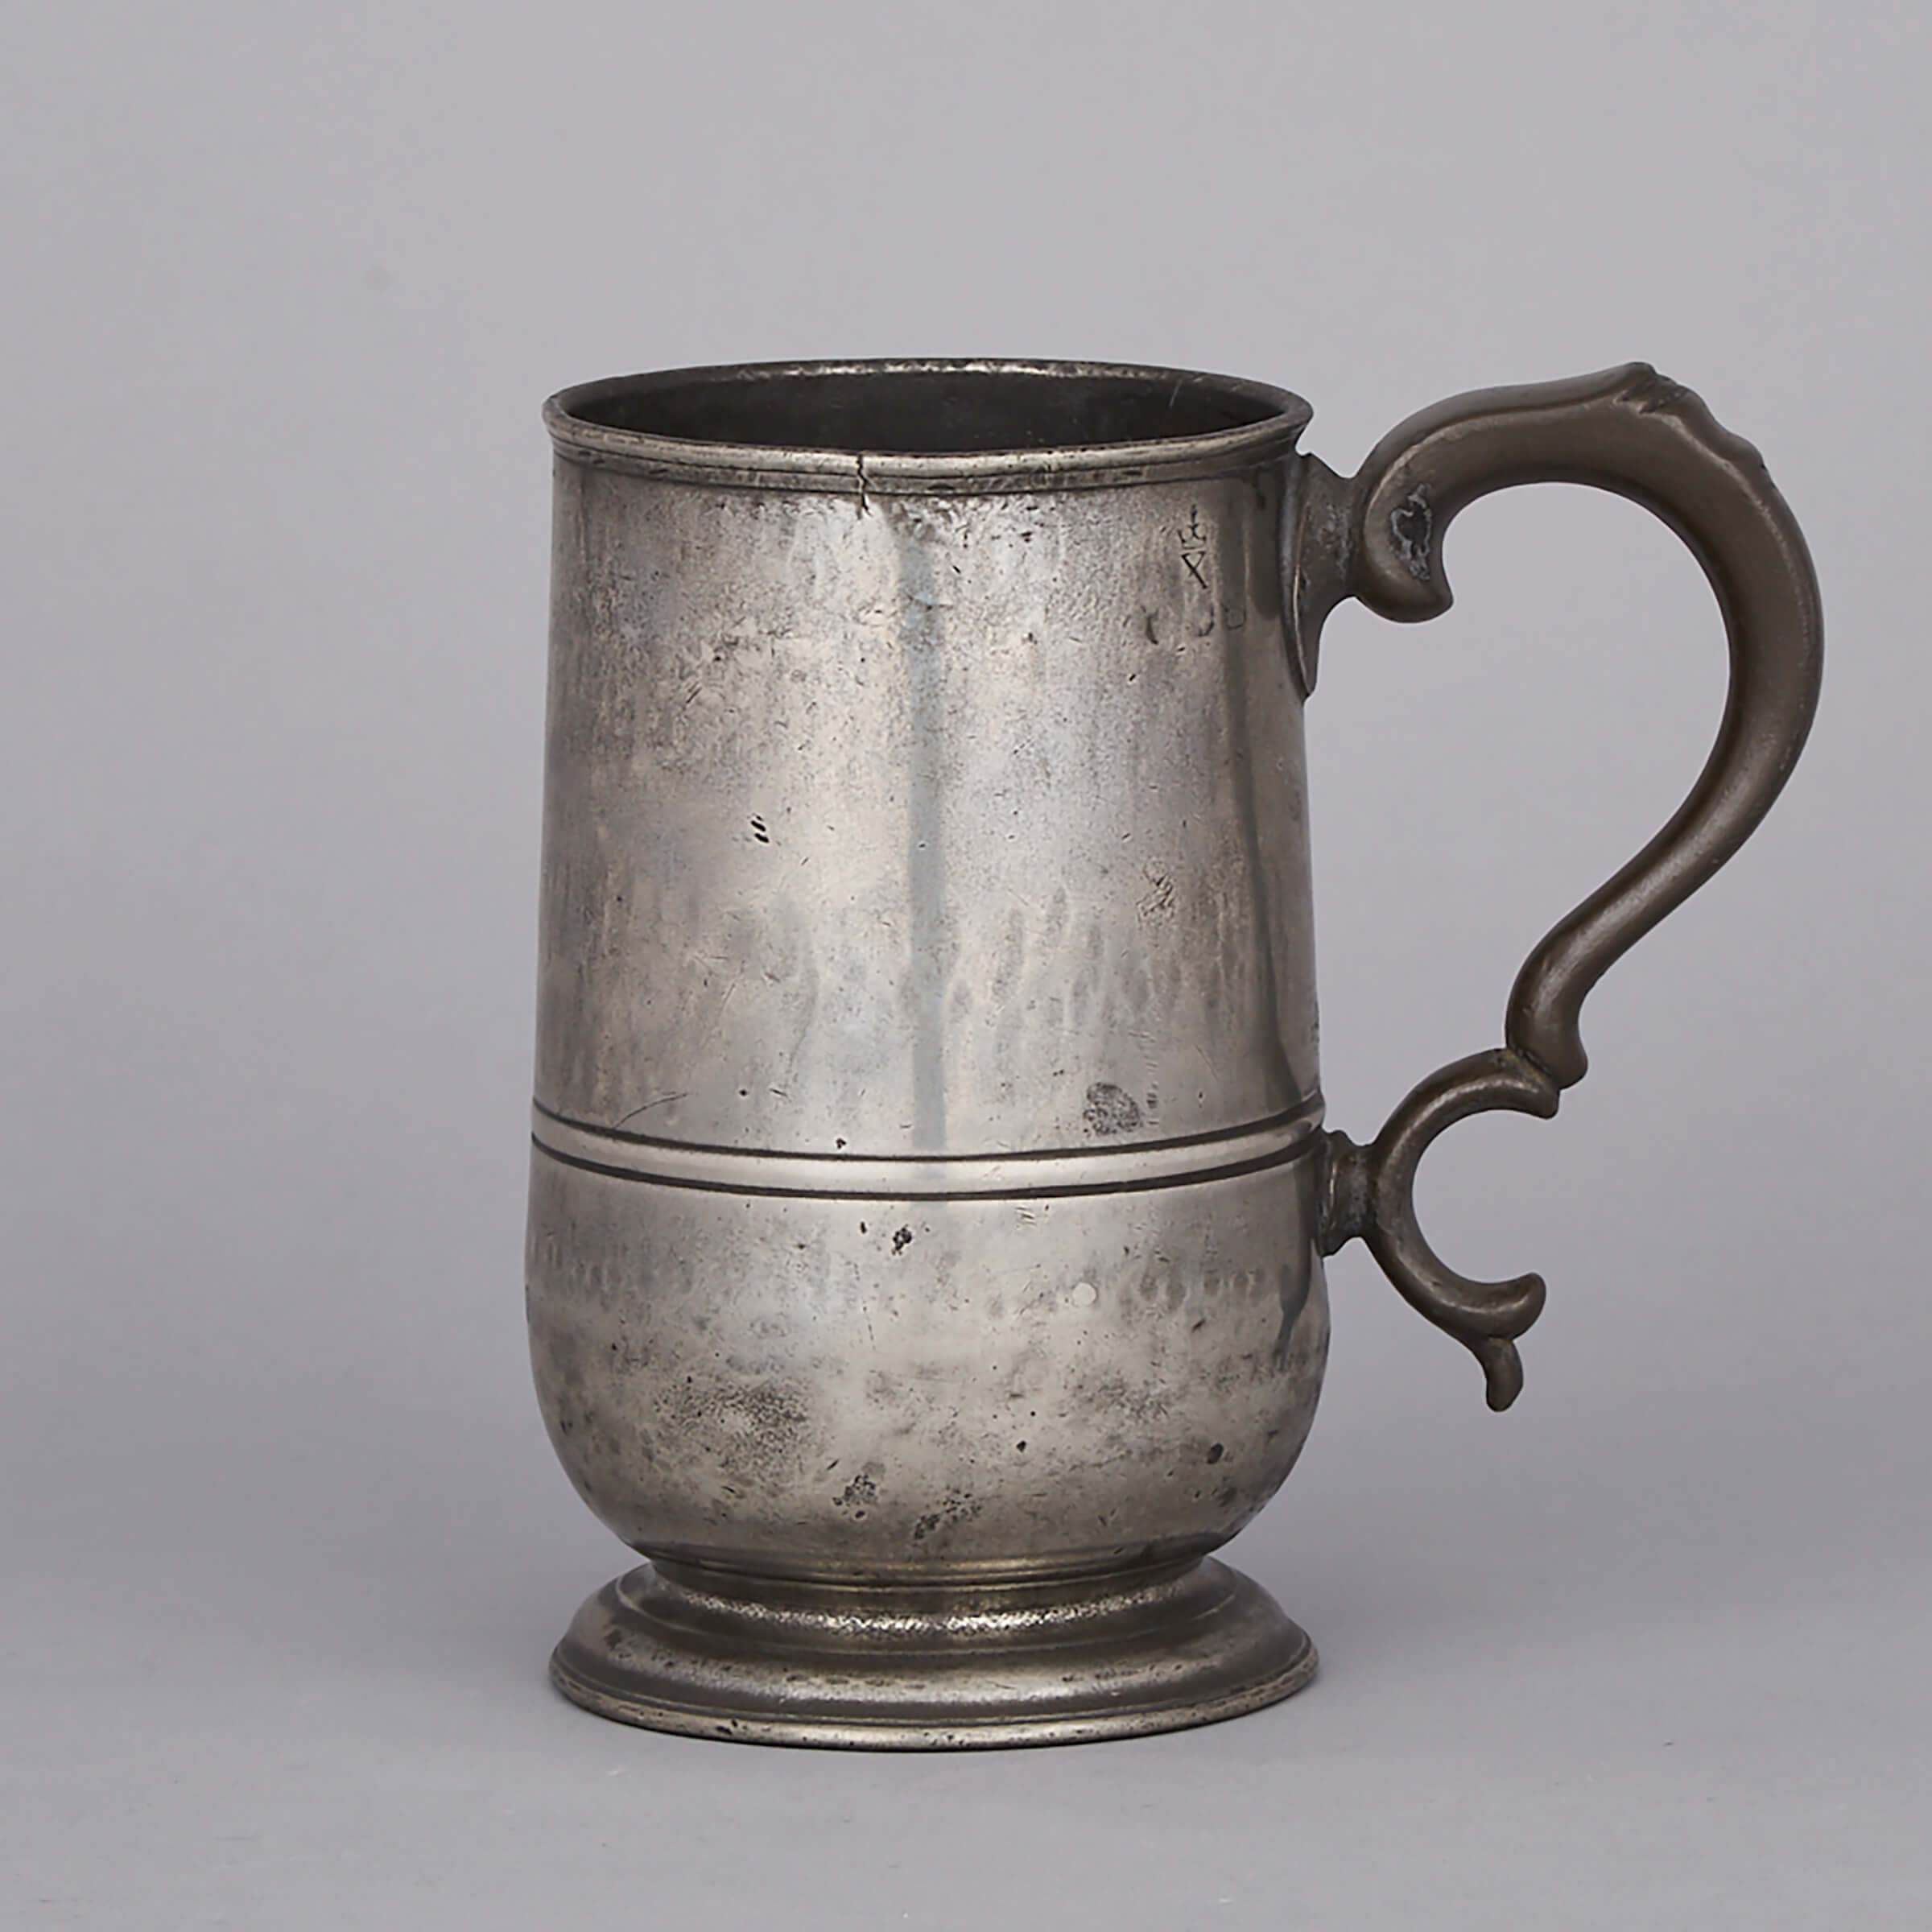 English OEAS Pewter Quart Mug, Thomas Leatherbarrow, Liverpool, c.1810